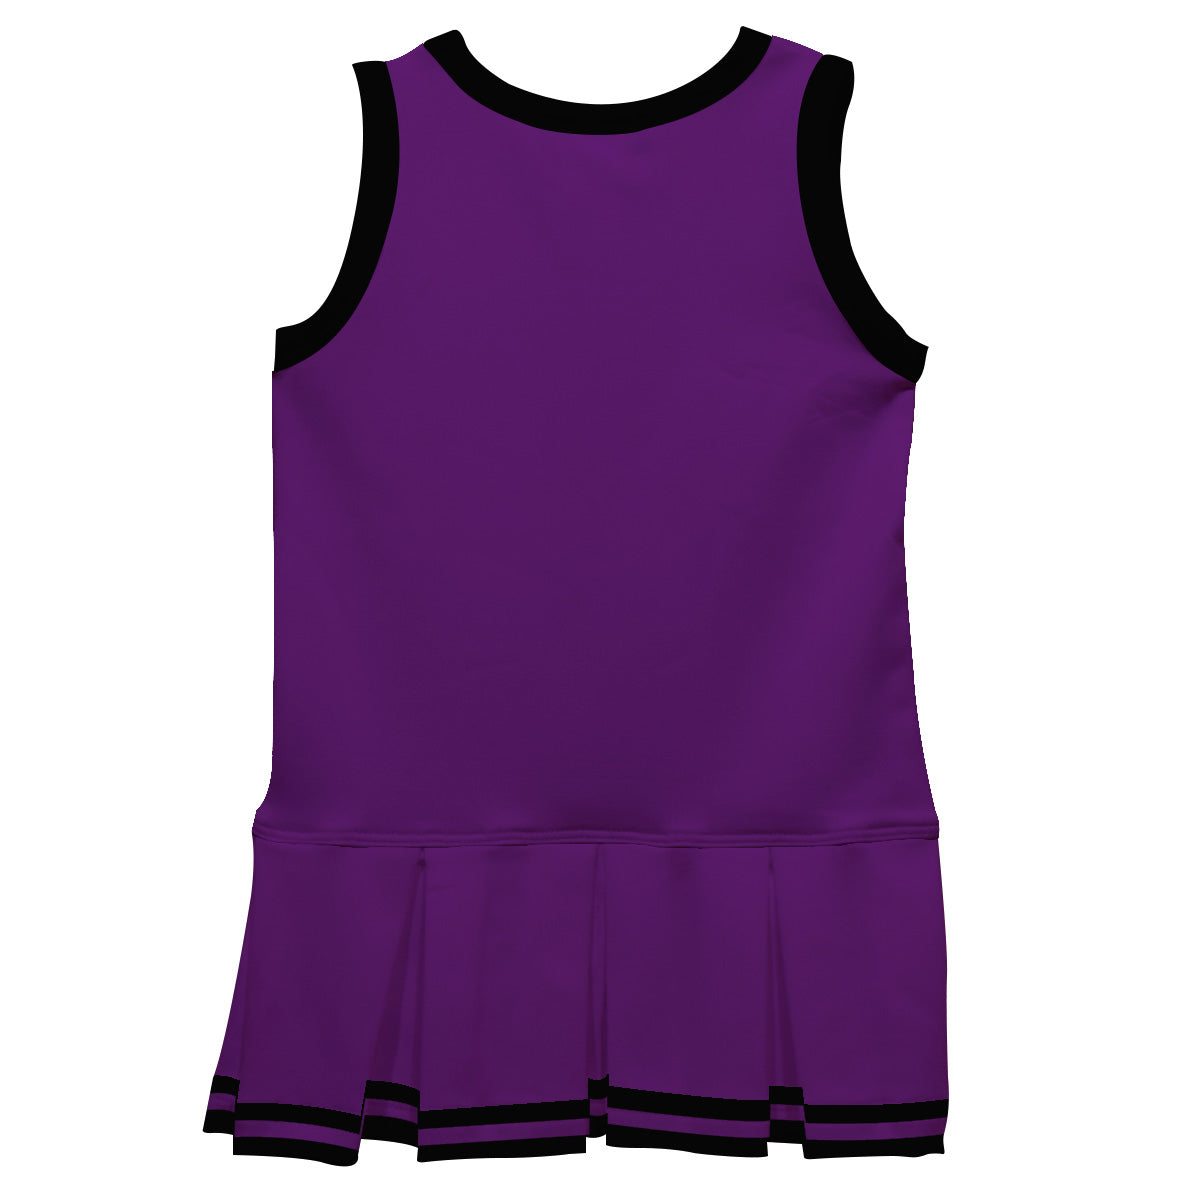 Blue & Black Sleeveless Cheerleader Dress - Wimziy&Co.